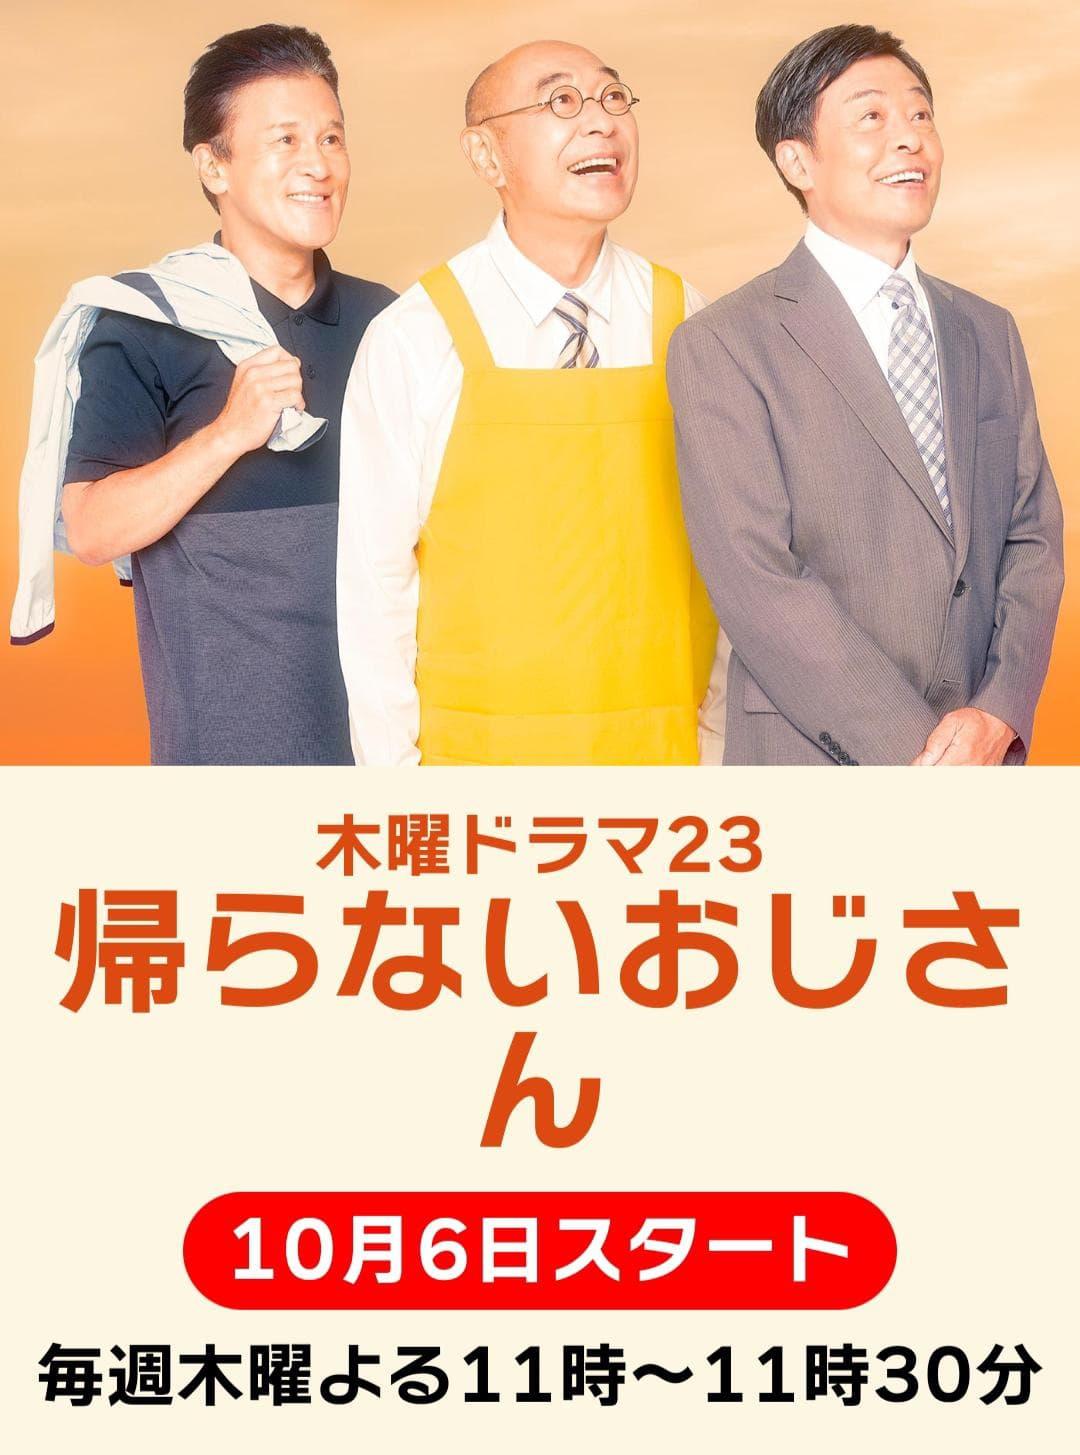 TV ratings for Kaeranai Ojisan (帰らないおじさん) in the United States. tbs TV series